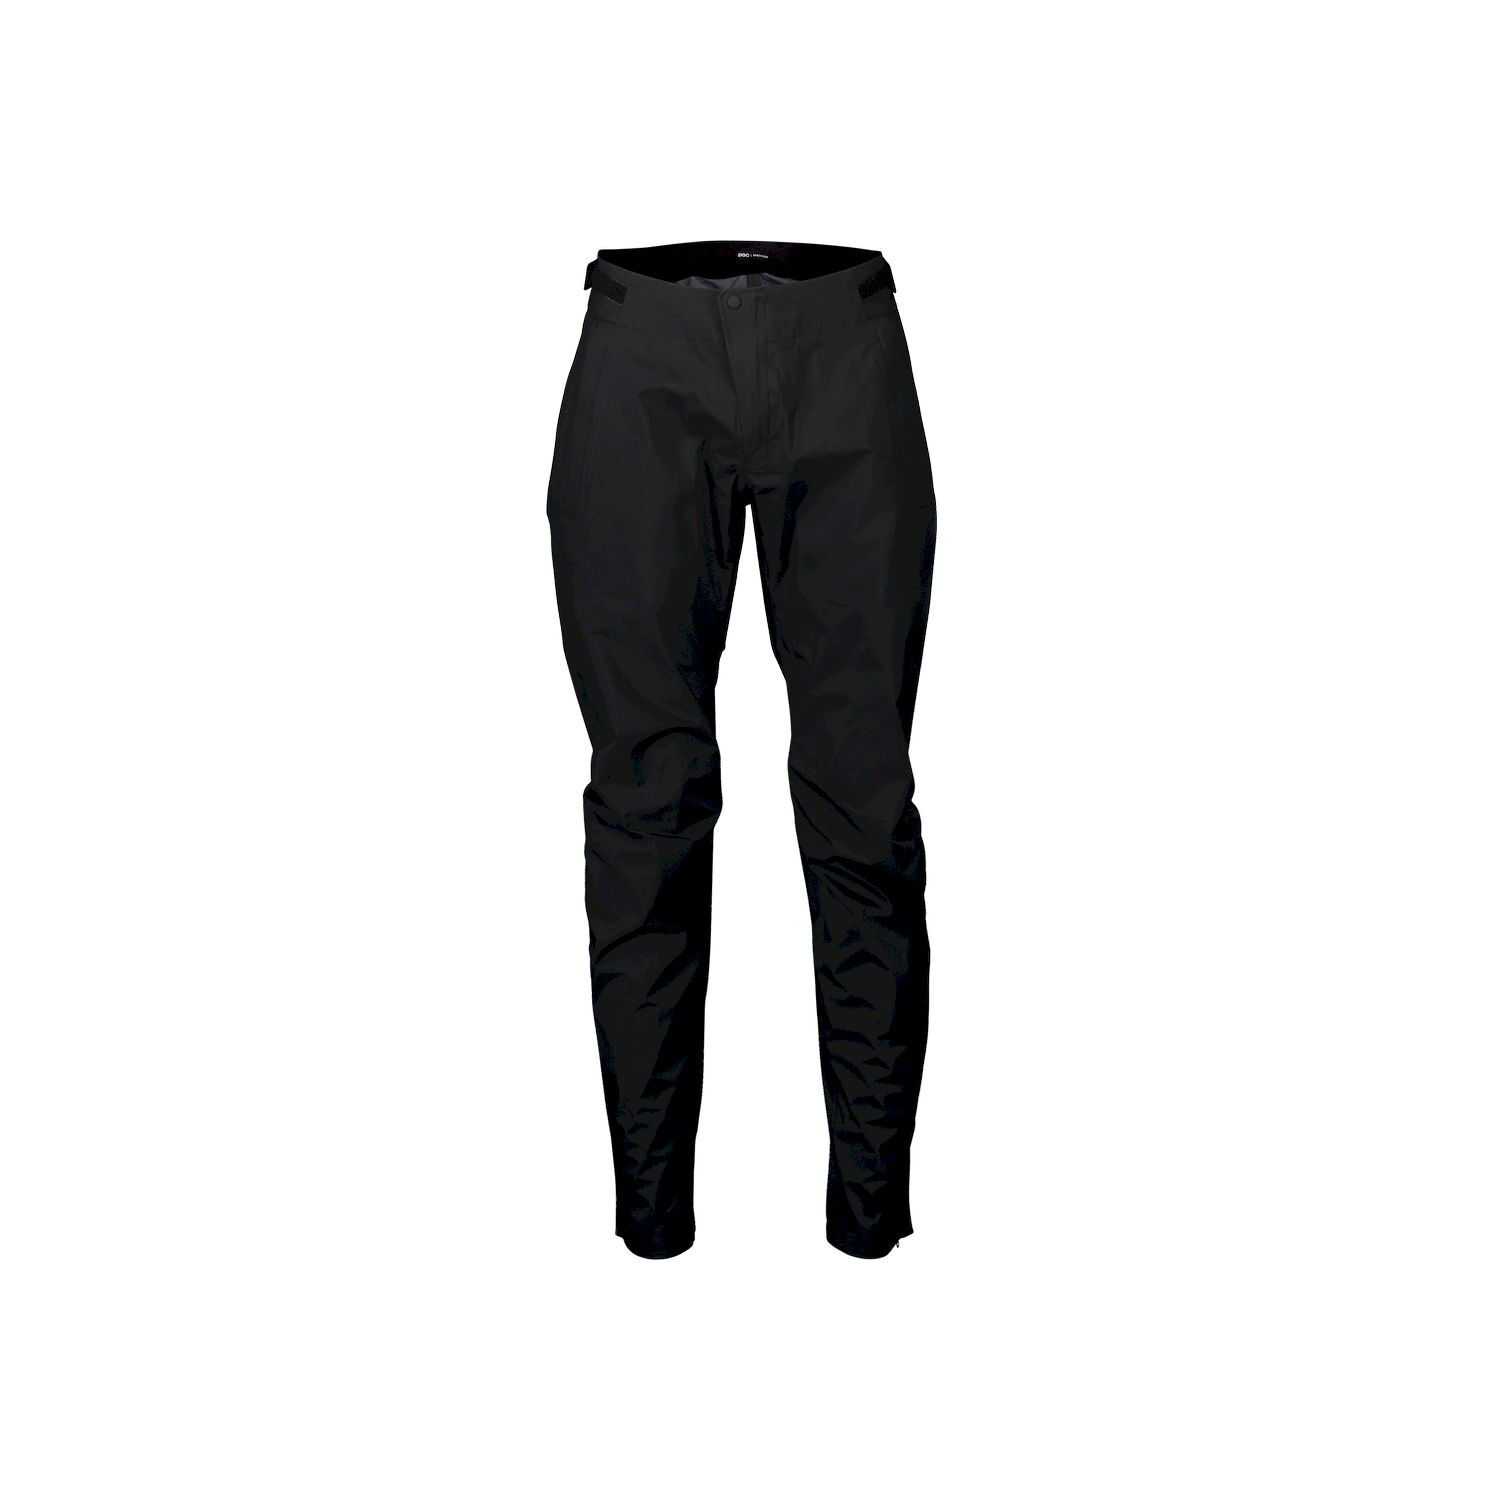 Poc Motion Rain Pants - Waterproof cycling trousers